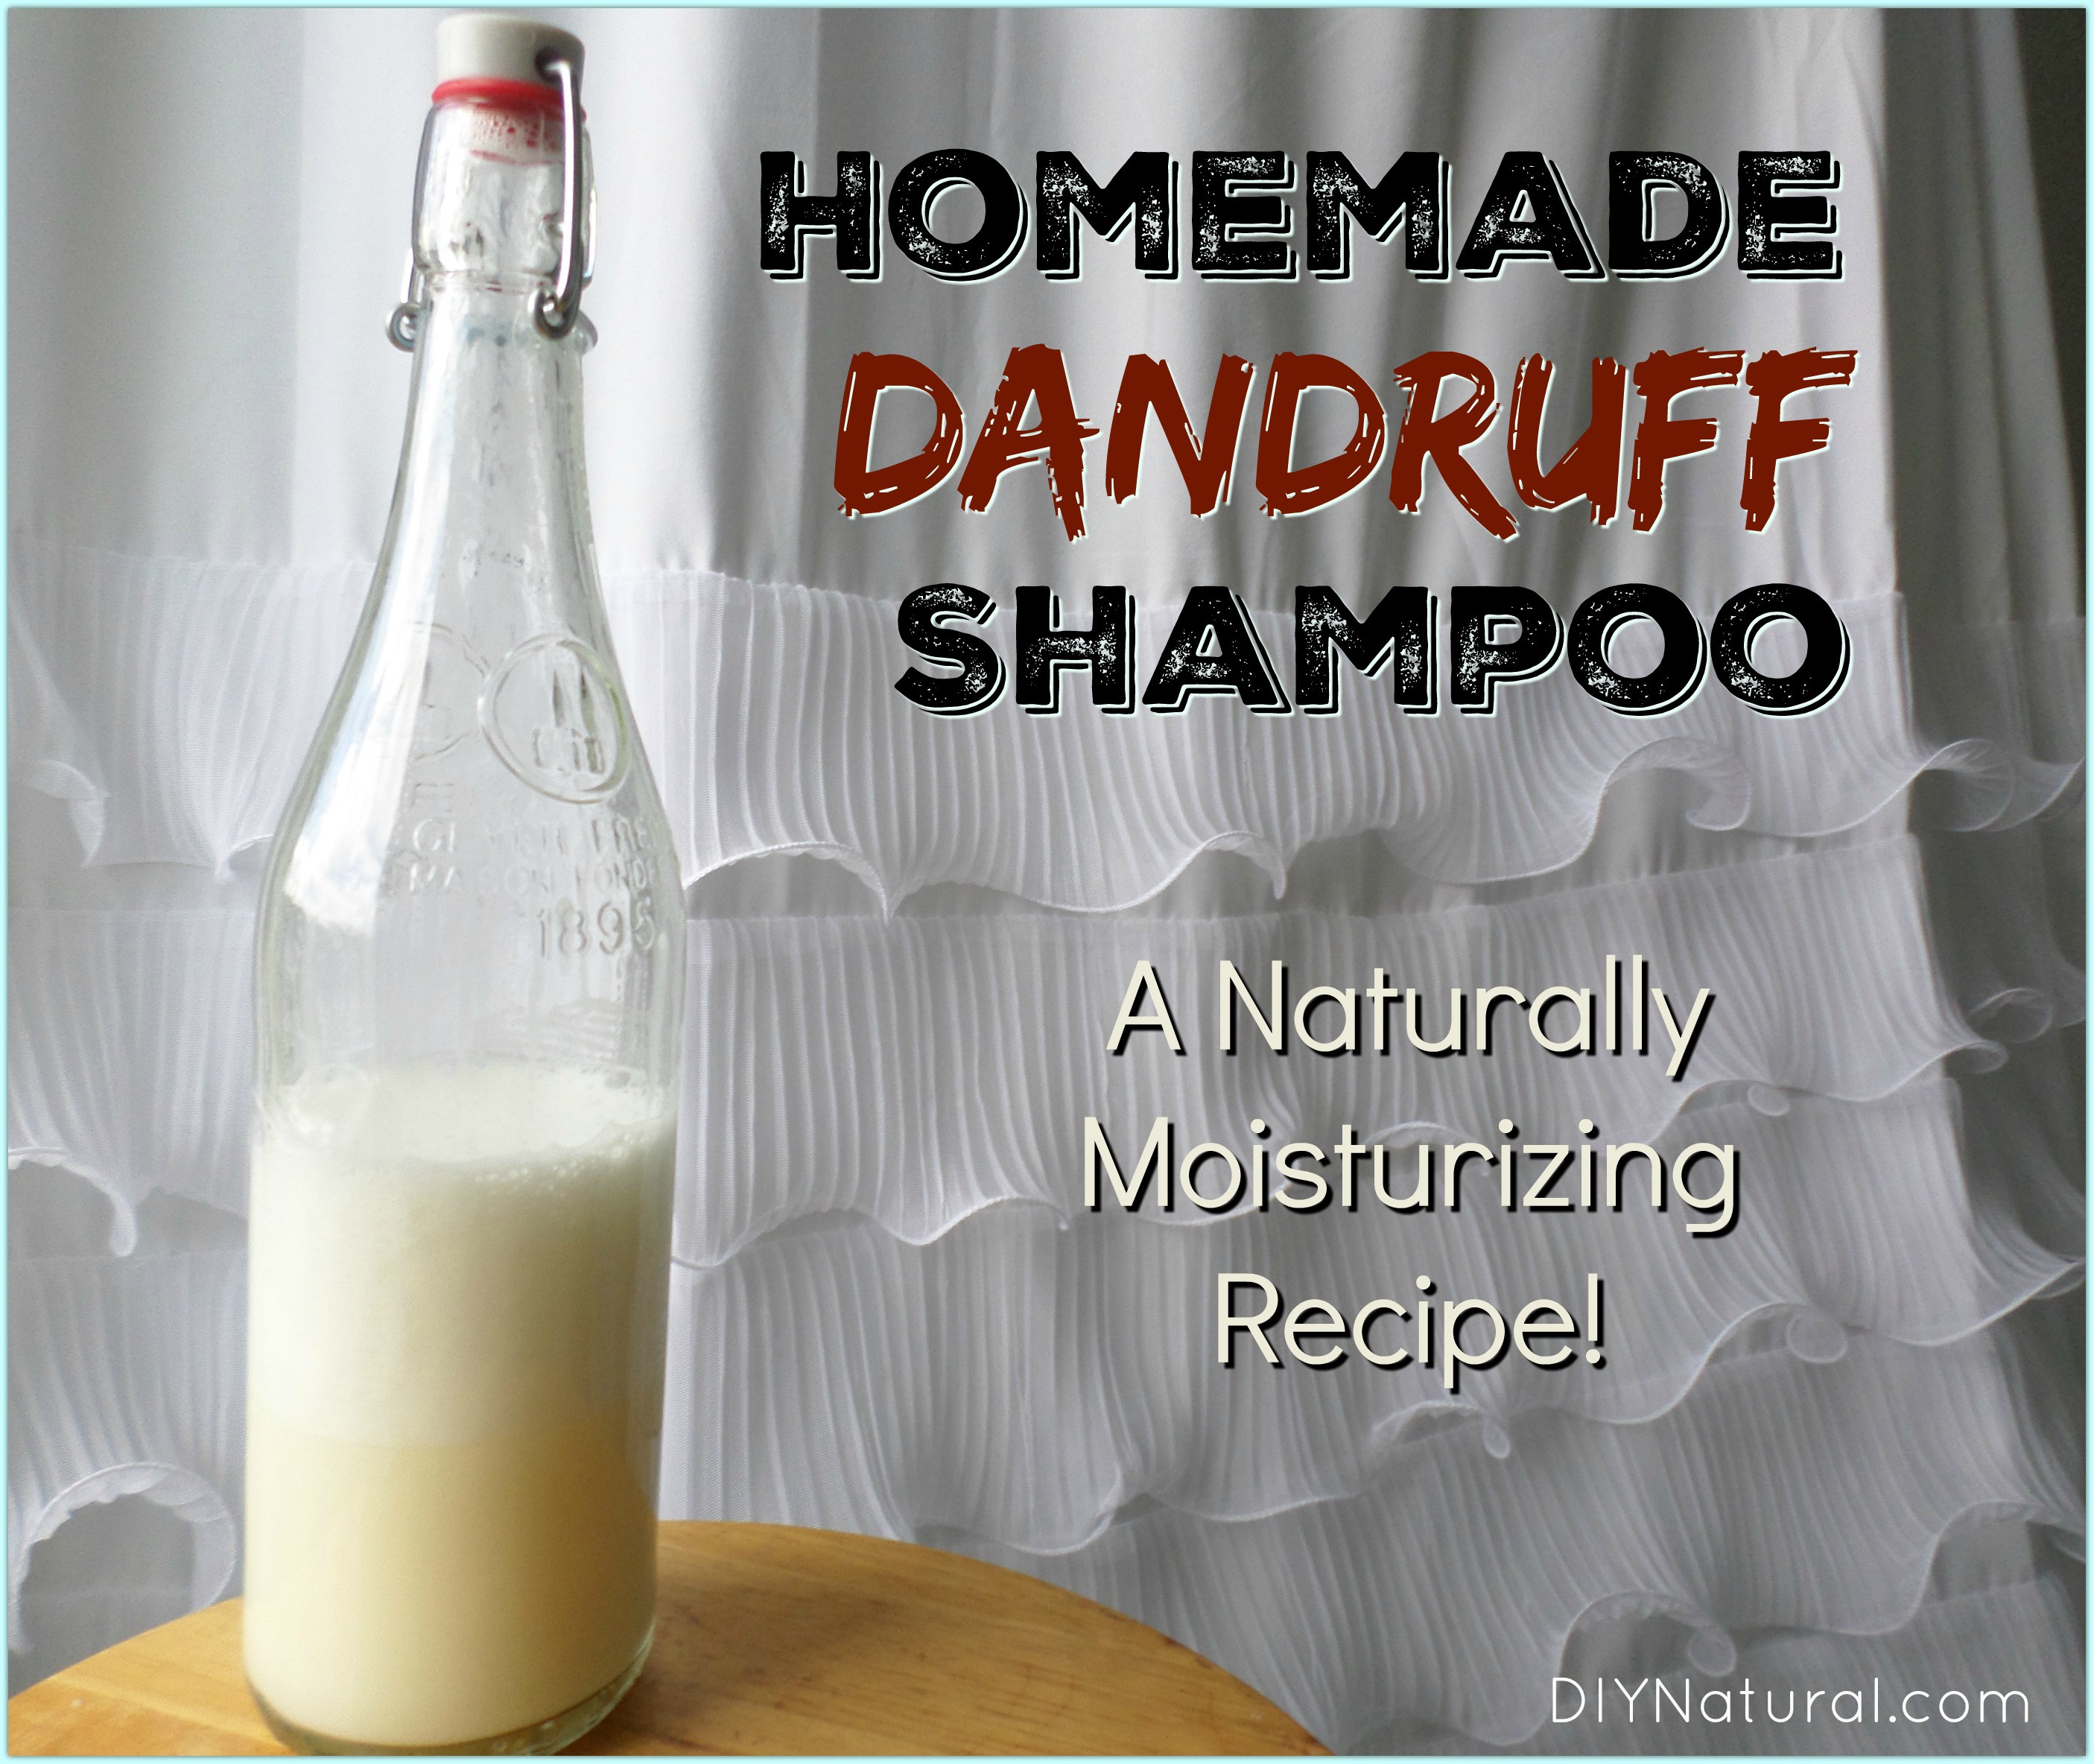 Best ideas about DIY Dandruff Shampoo
. Save or Pin Home Reme s for Dandruff A Homemade Dandruff Shampoo Recipe Now.